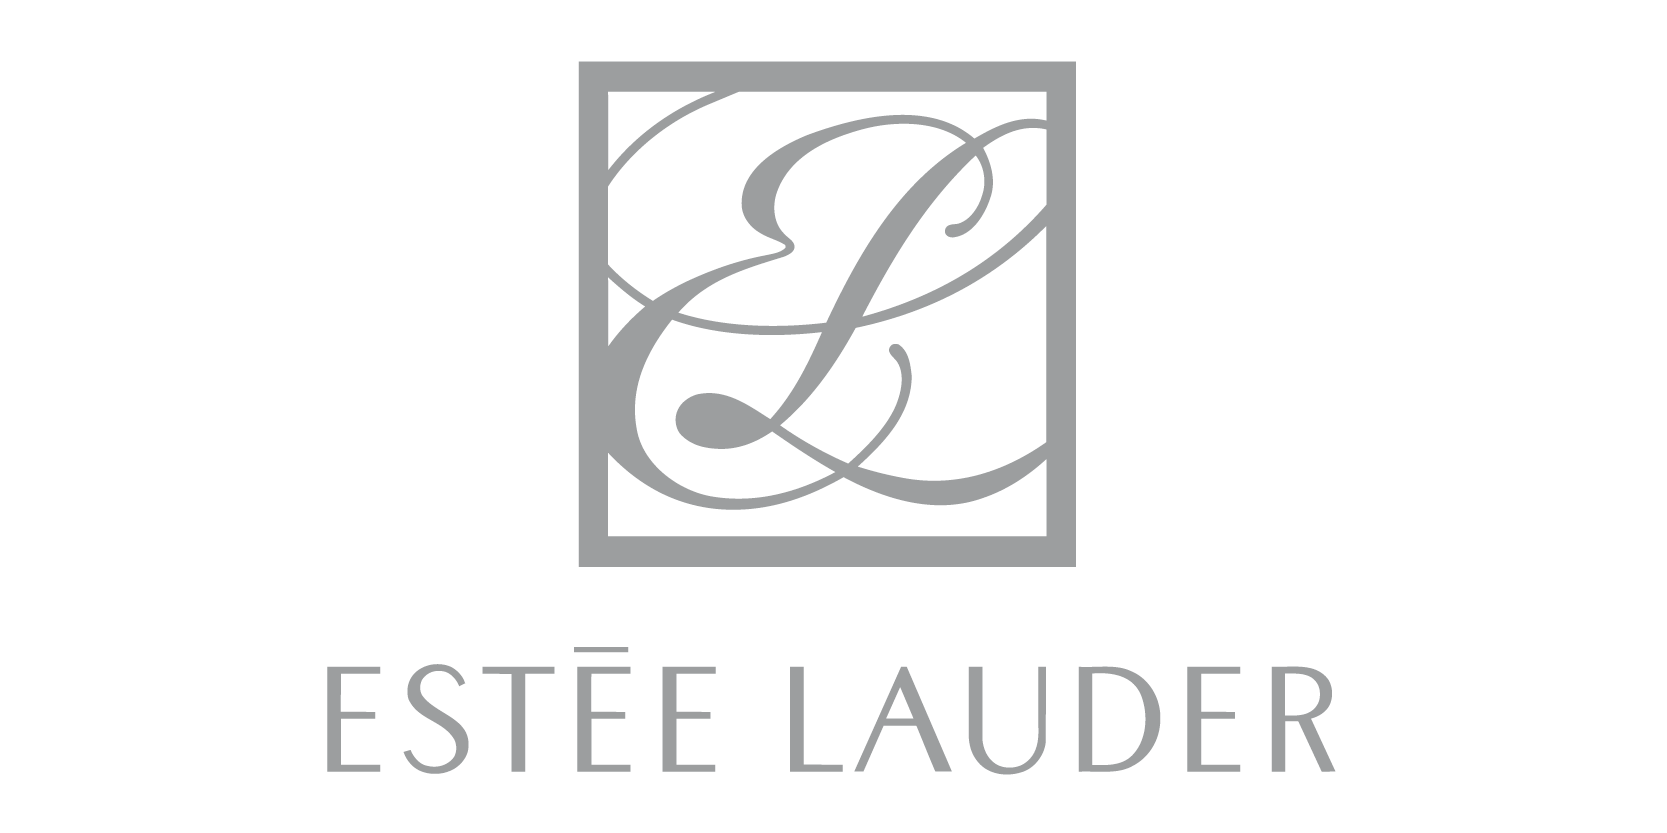 Estee Lauder Logo - Estee lauder Logos